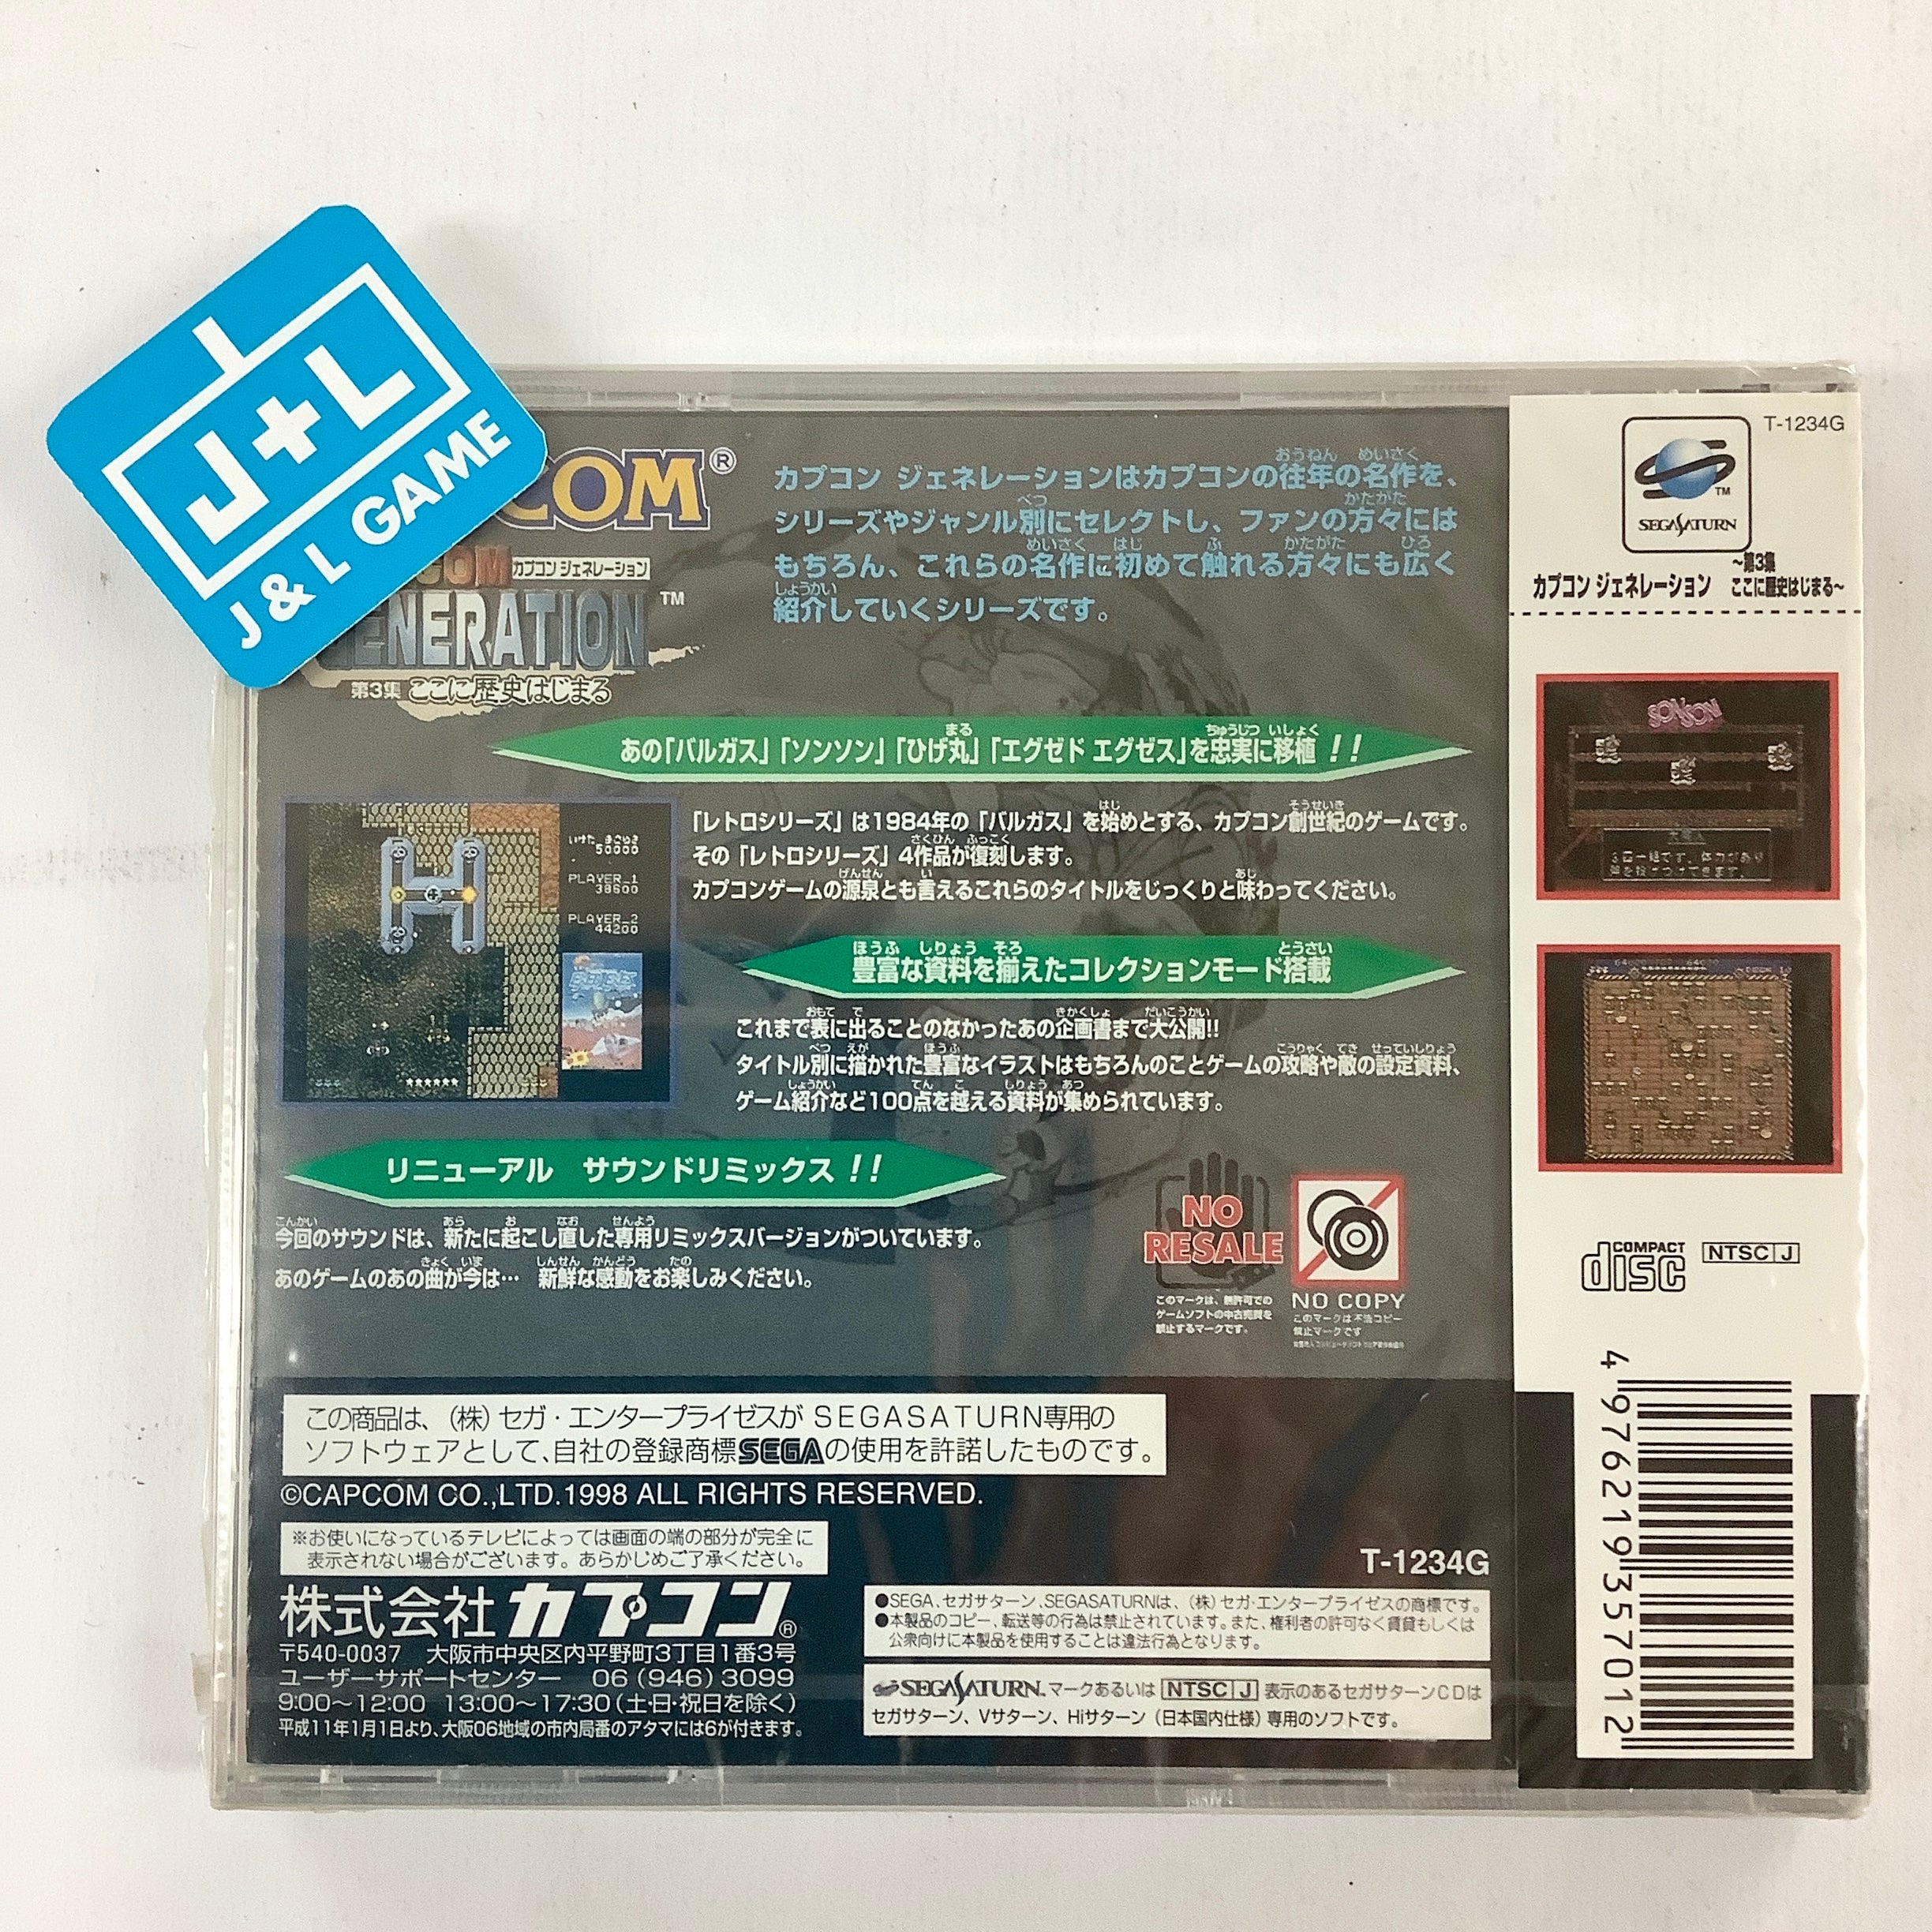 Capcom Generation 3: Dai 3 Shuu Koko ni Rekishi Hajimaru - (SS) SEGA Saturn (Japanese Import) Video Games Capcom   